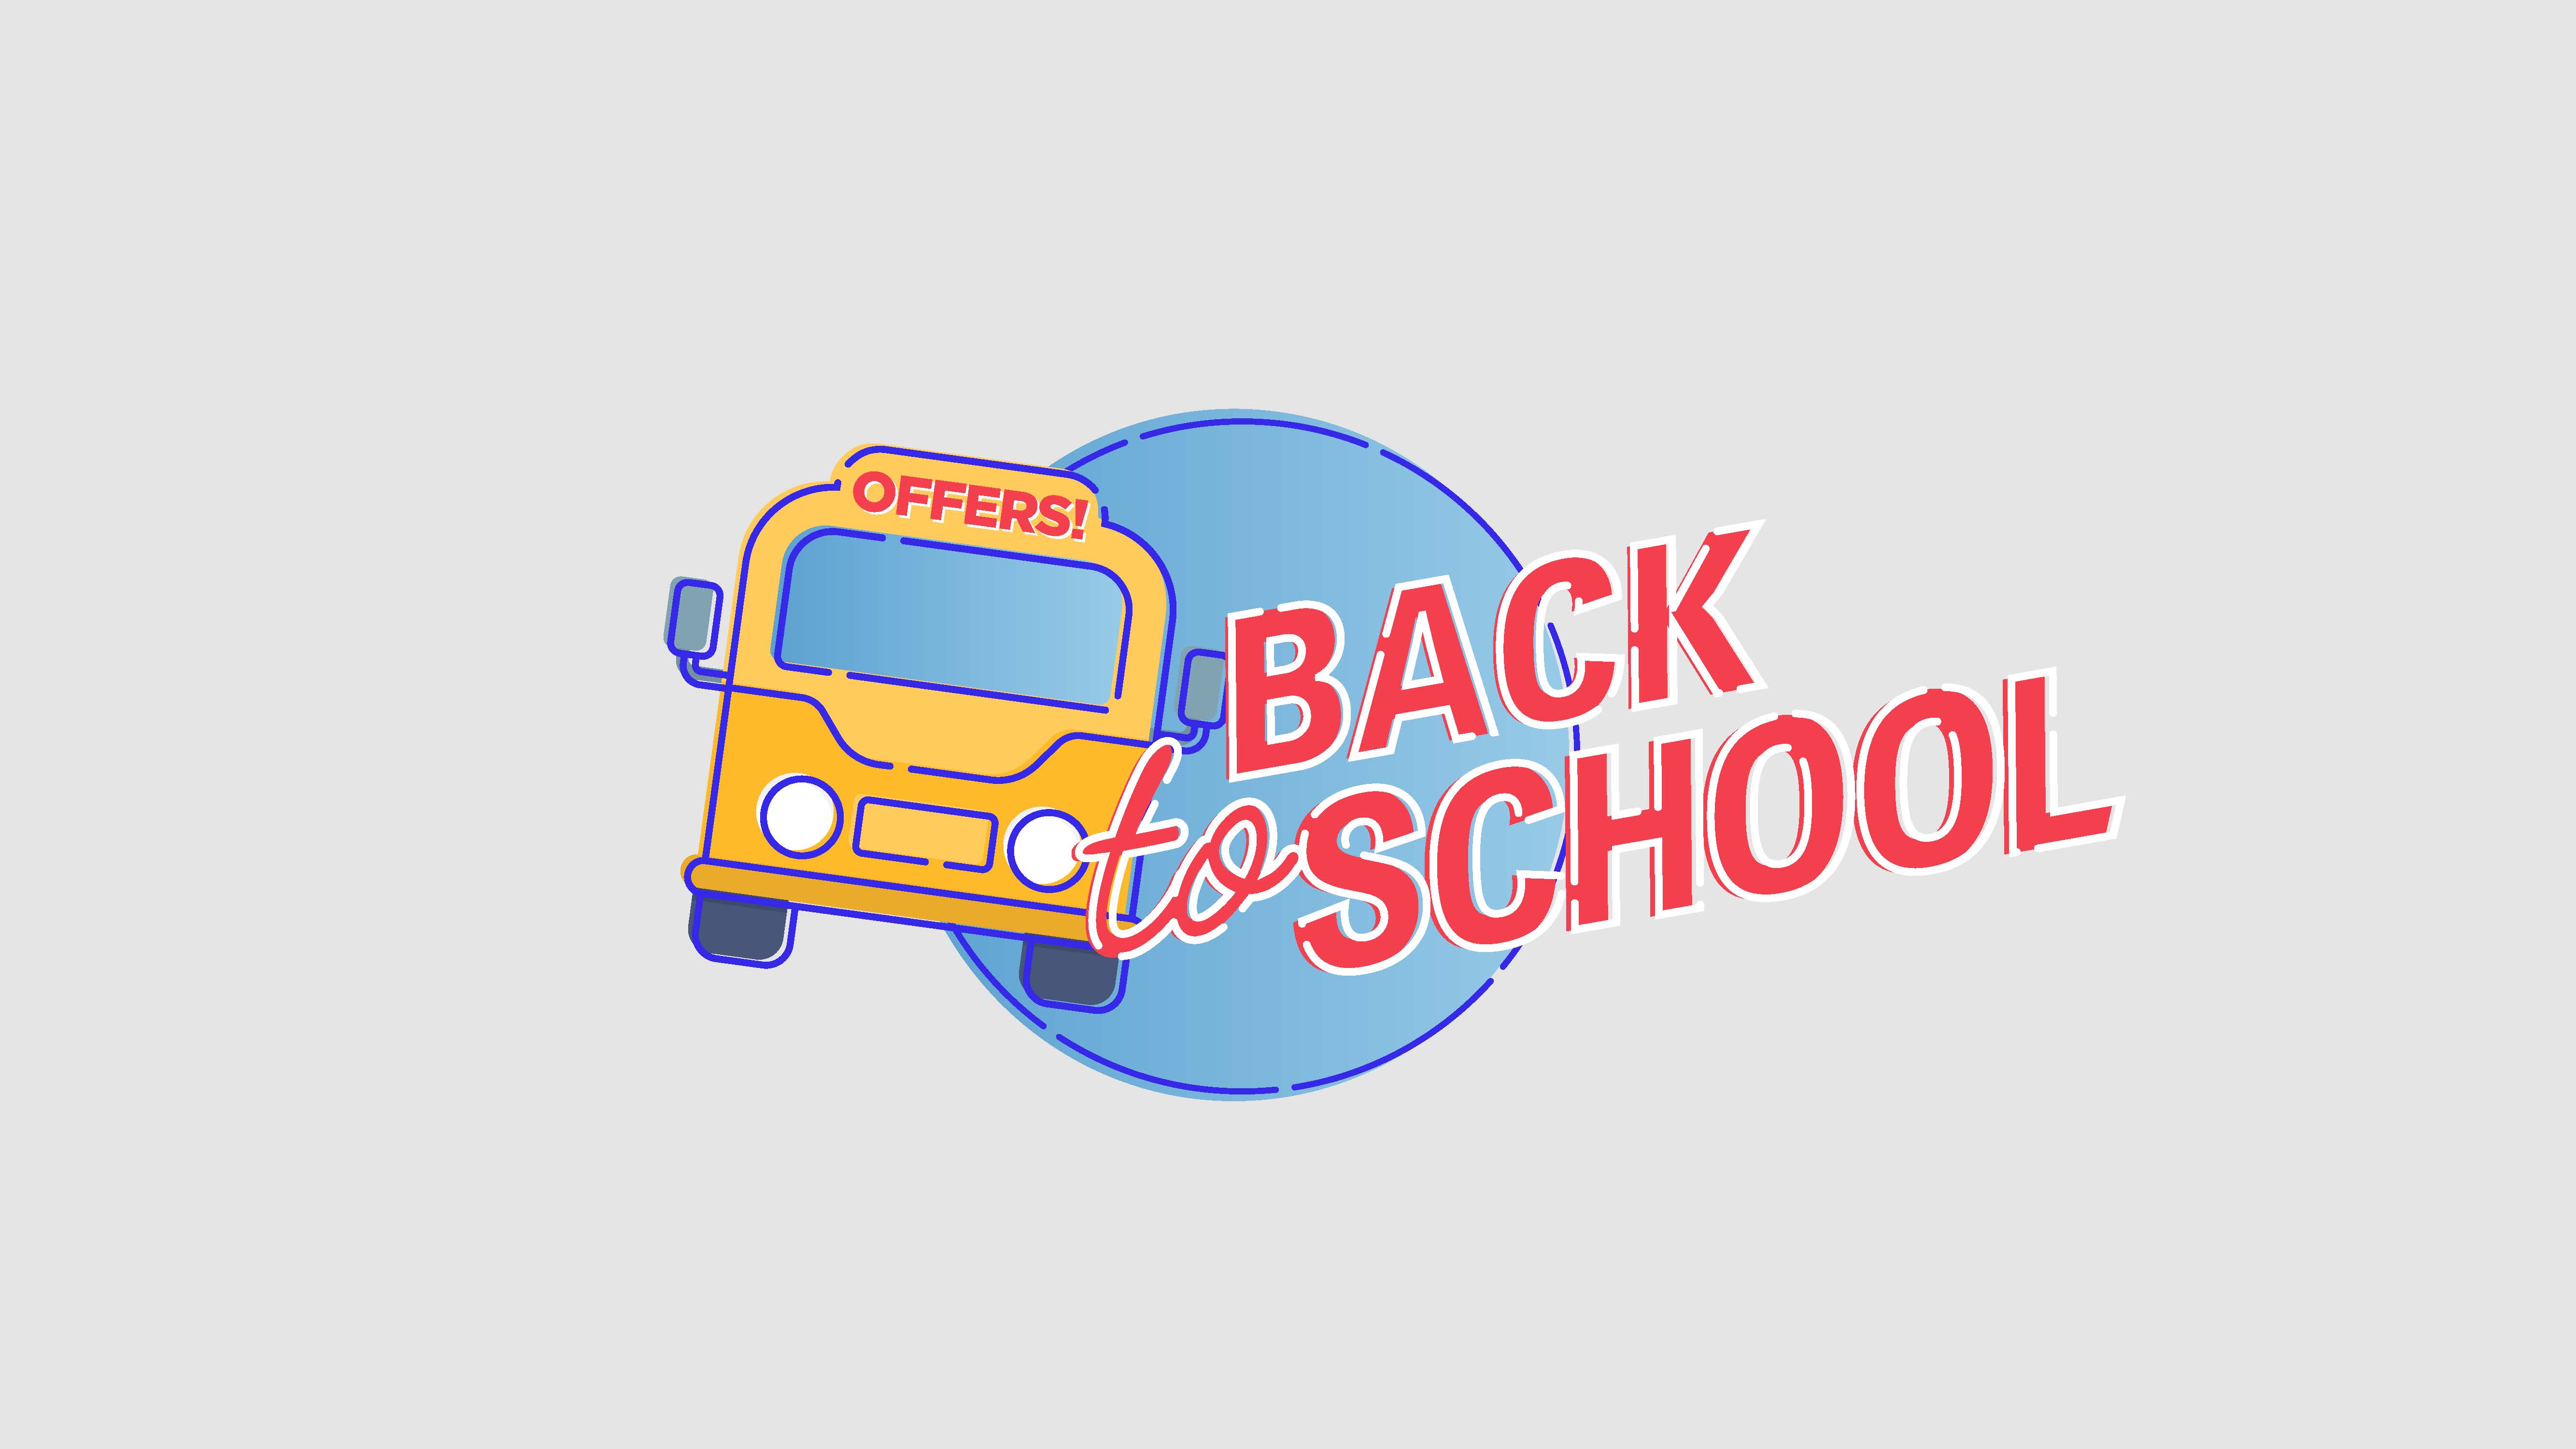 “Back to School” με Super Προσφορές σε προϊόντα τεχνολογίας